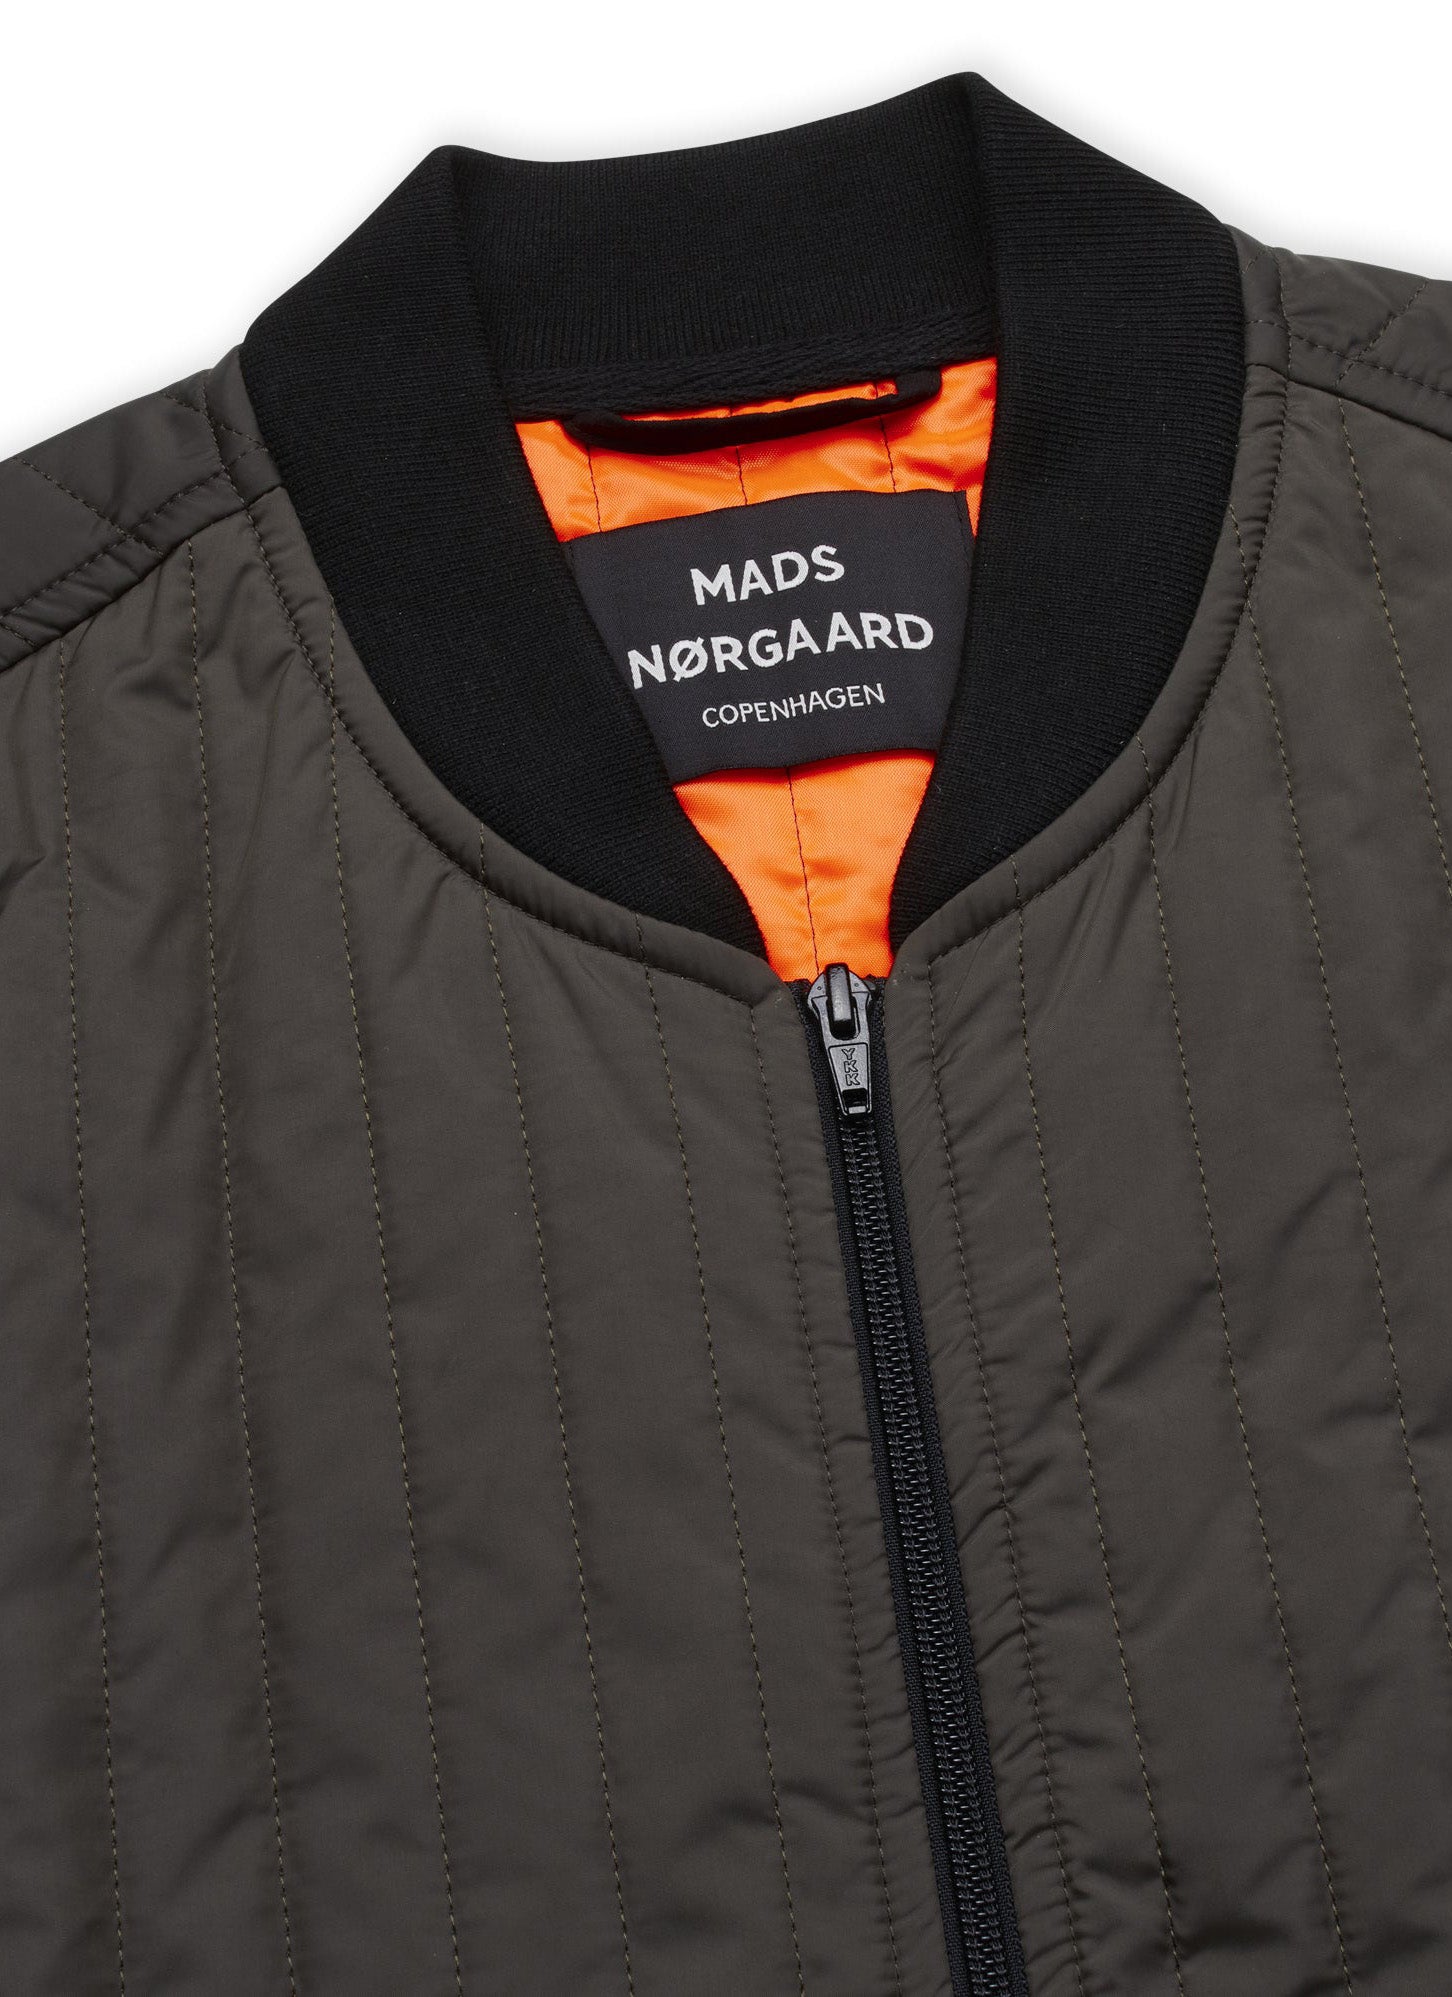 Mads Norgaard Janus Jacket - Green/Orange lining